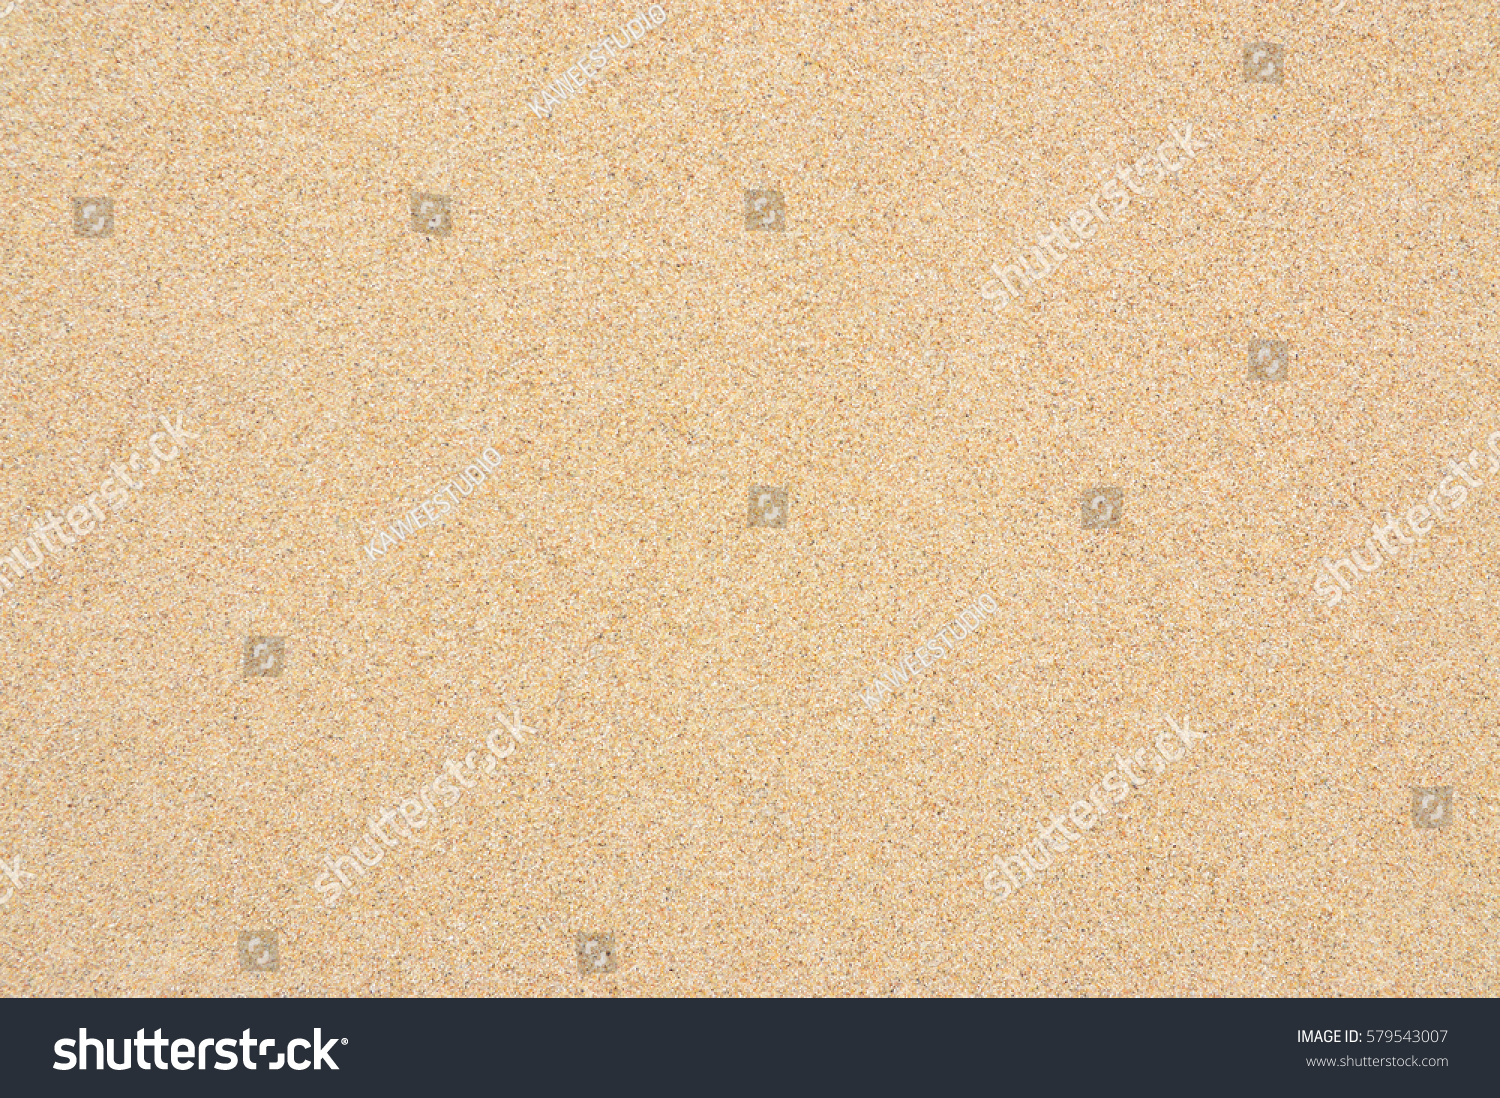 Sand Texture Sand Background Beach Sand Stock Photo 579543007 ...